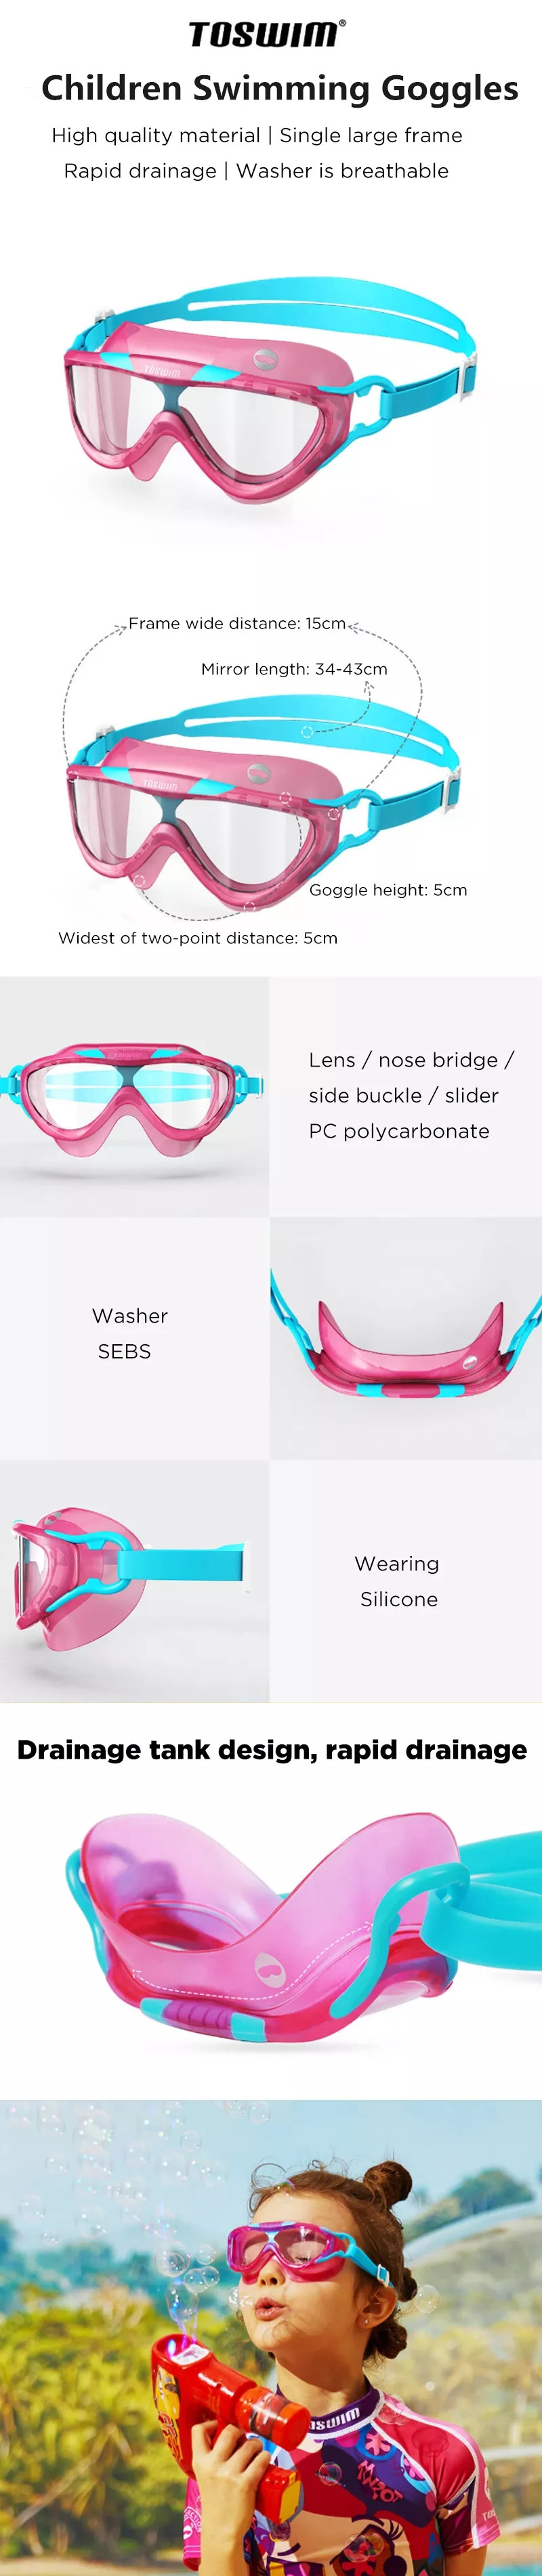 TOSWIM-Children-Swimming-Goggles-Anti-Fog-Rapid-Drainage-Breathable-Comfort-HD-Glasses-Water-Sports-1521149-1